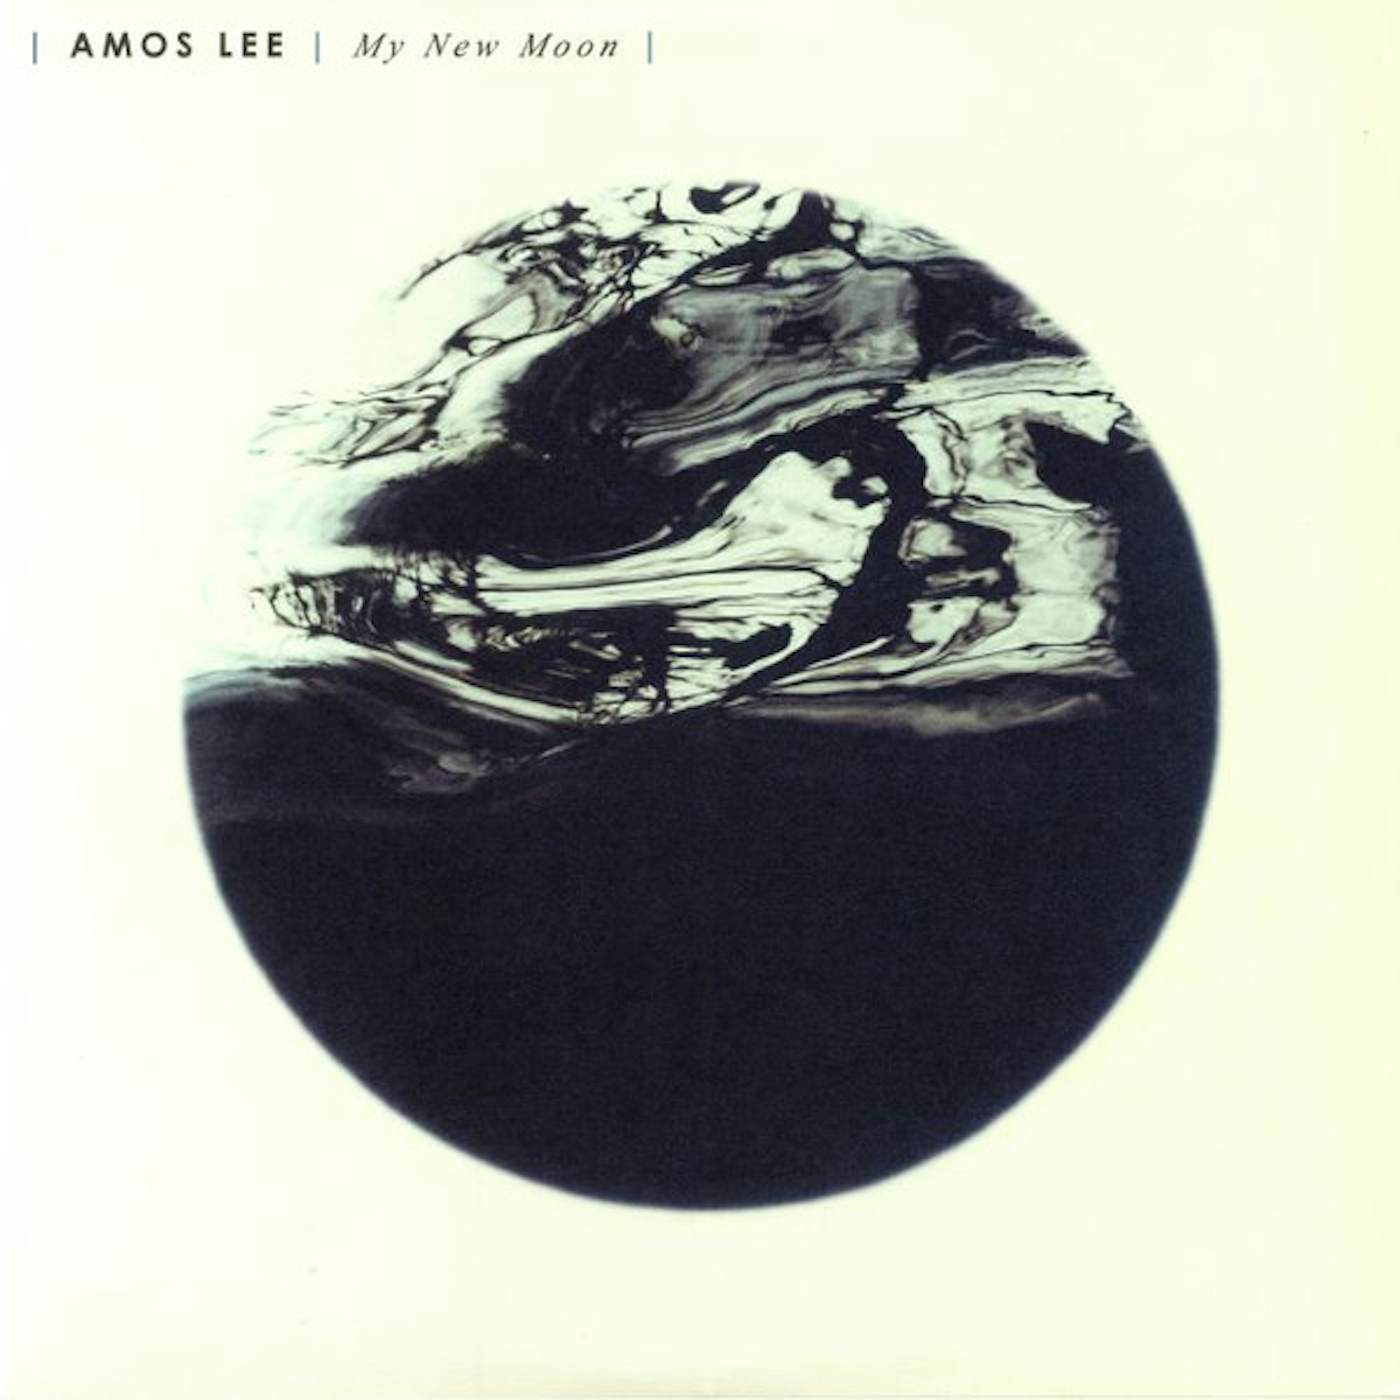 Amos Lee My New Moon Vinyl Record